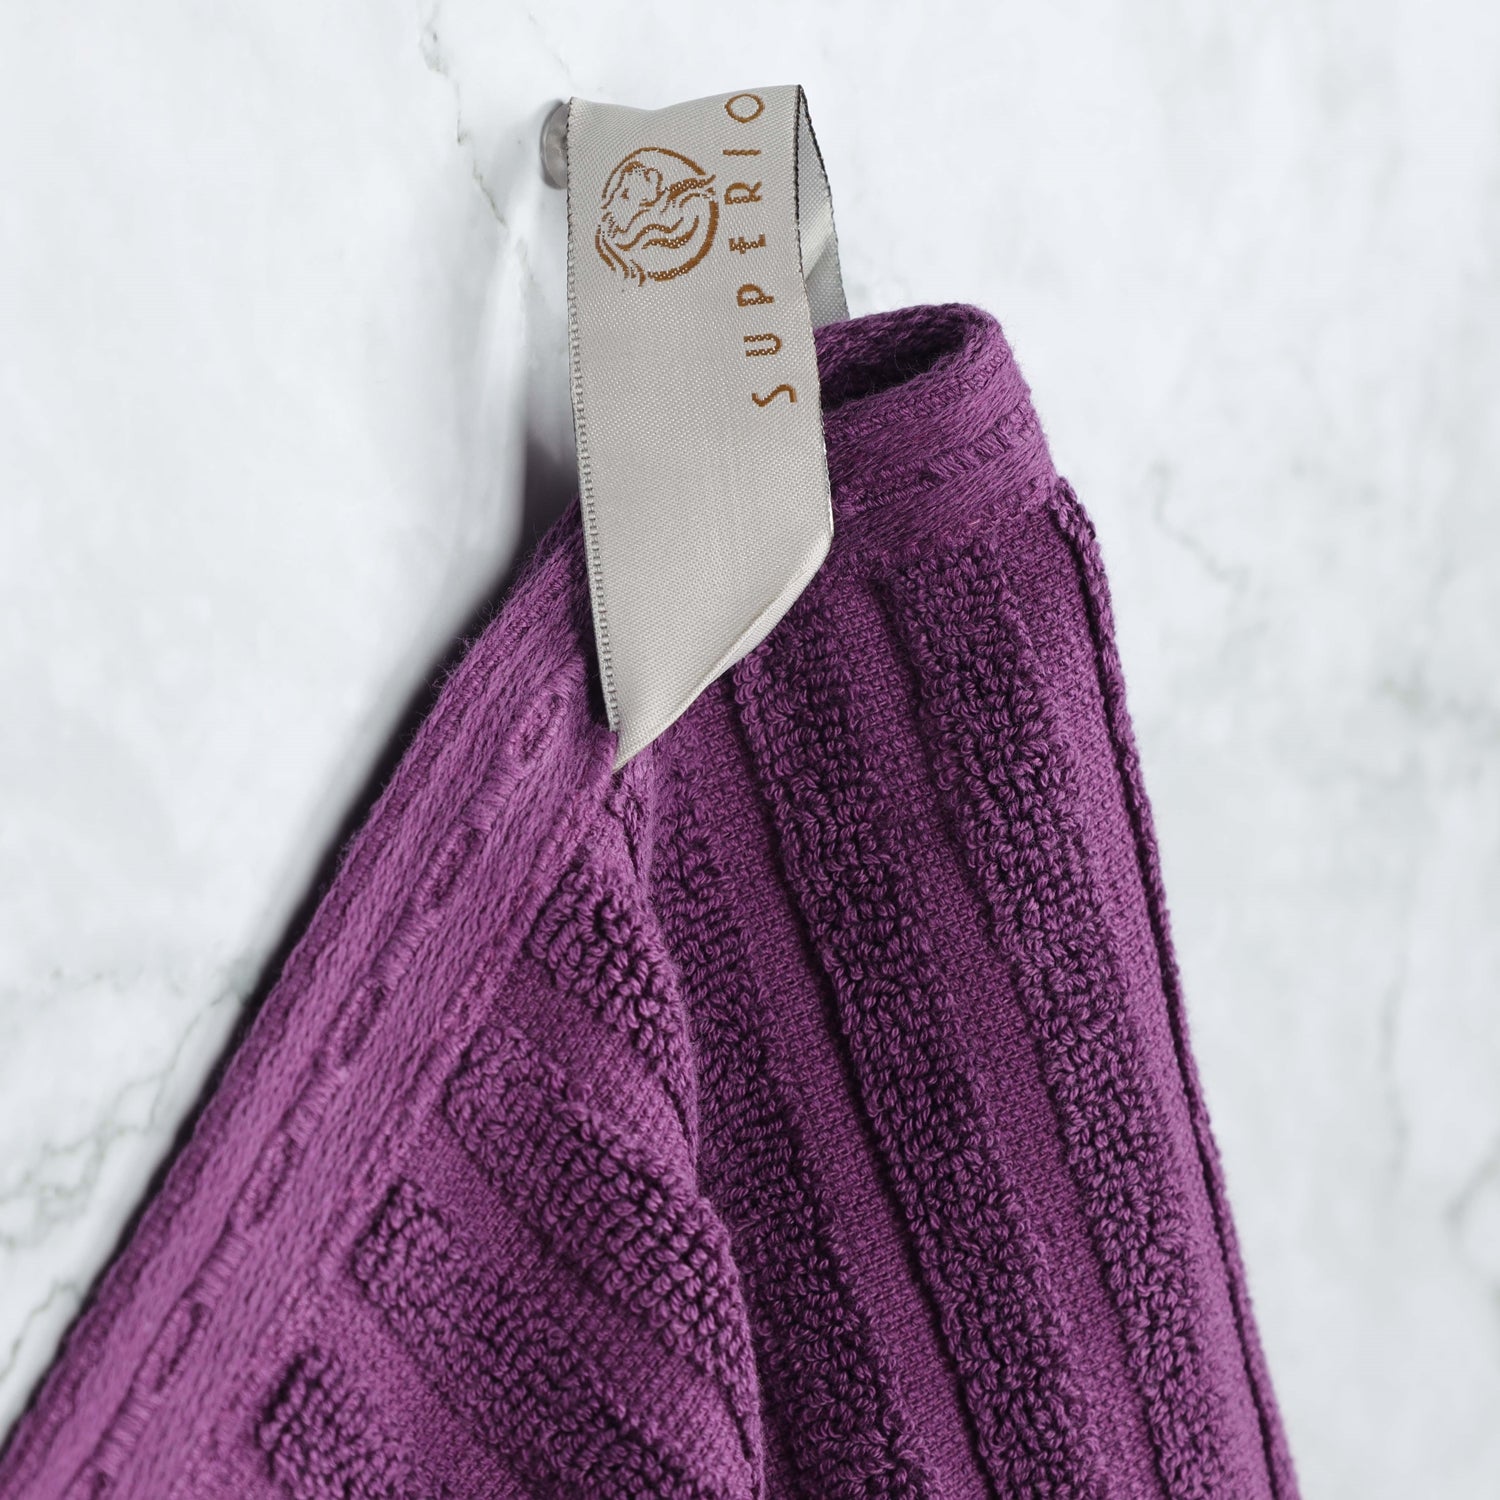 Superior Soho Ribbed Textured Cotton Ultra-Absorbent Hand Towel and Bath Sheet Set